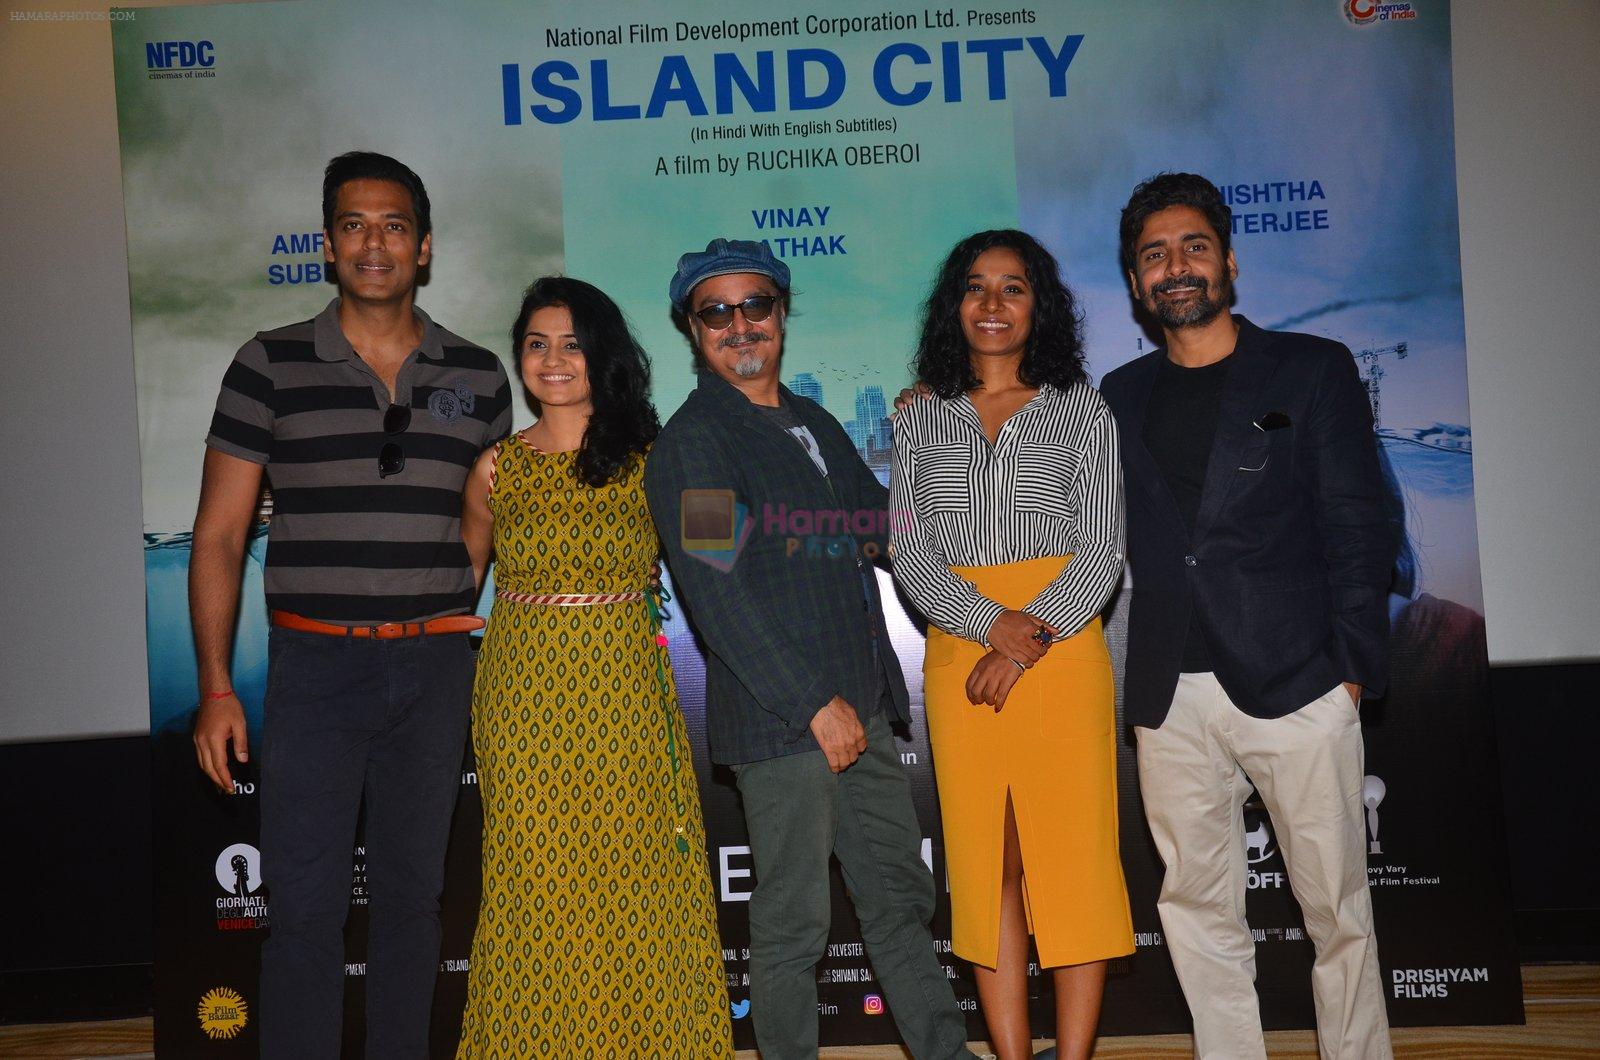 Amruta Subhash, Vinay Pathak, Tannishtha Chatterjee, Samir Kochhar at Island City press meet on 24th Aug 2016